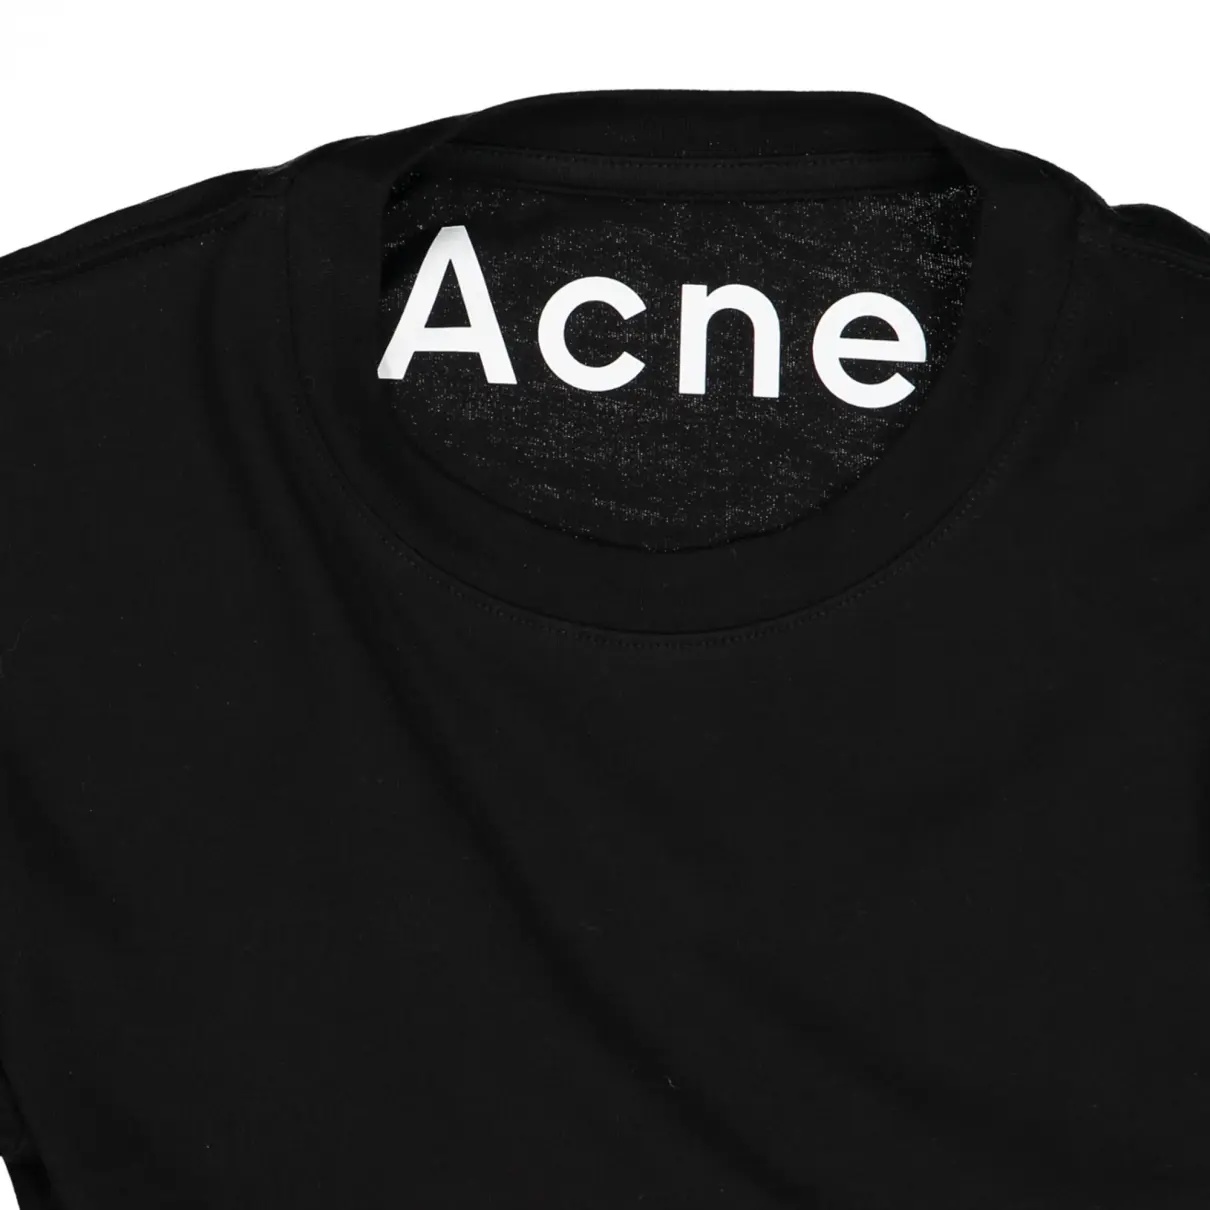 Buy ACNE T-shirt online